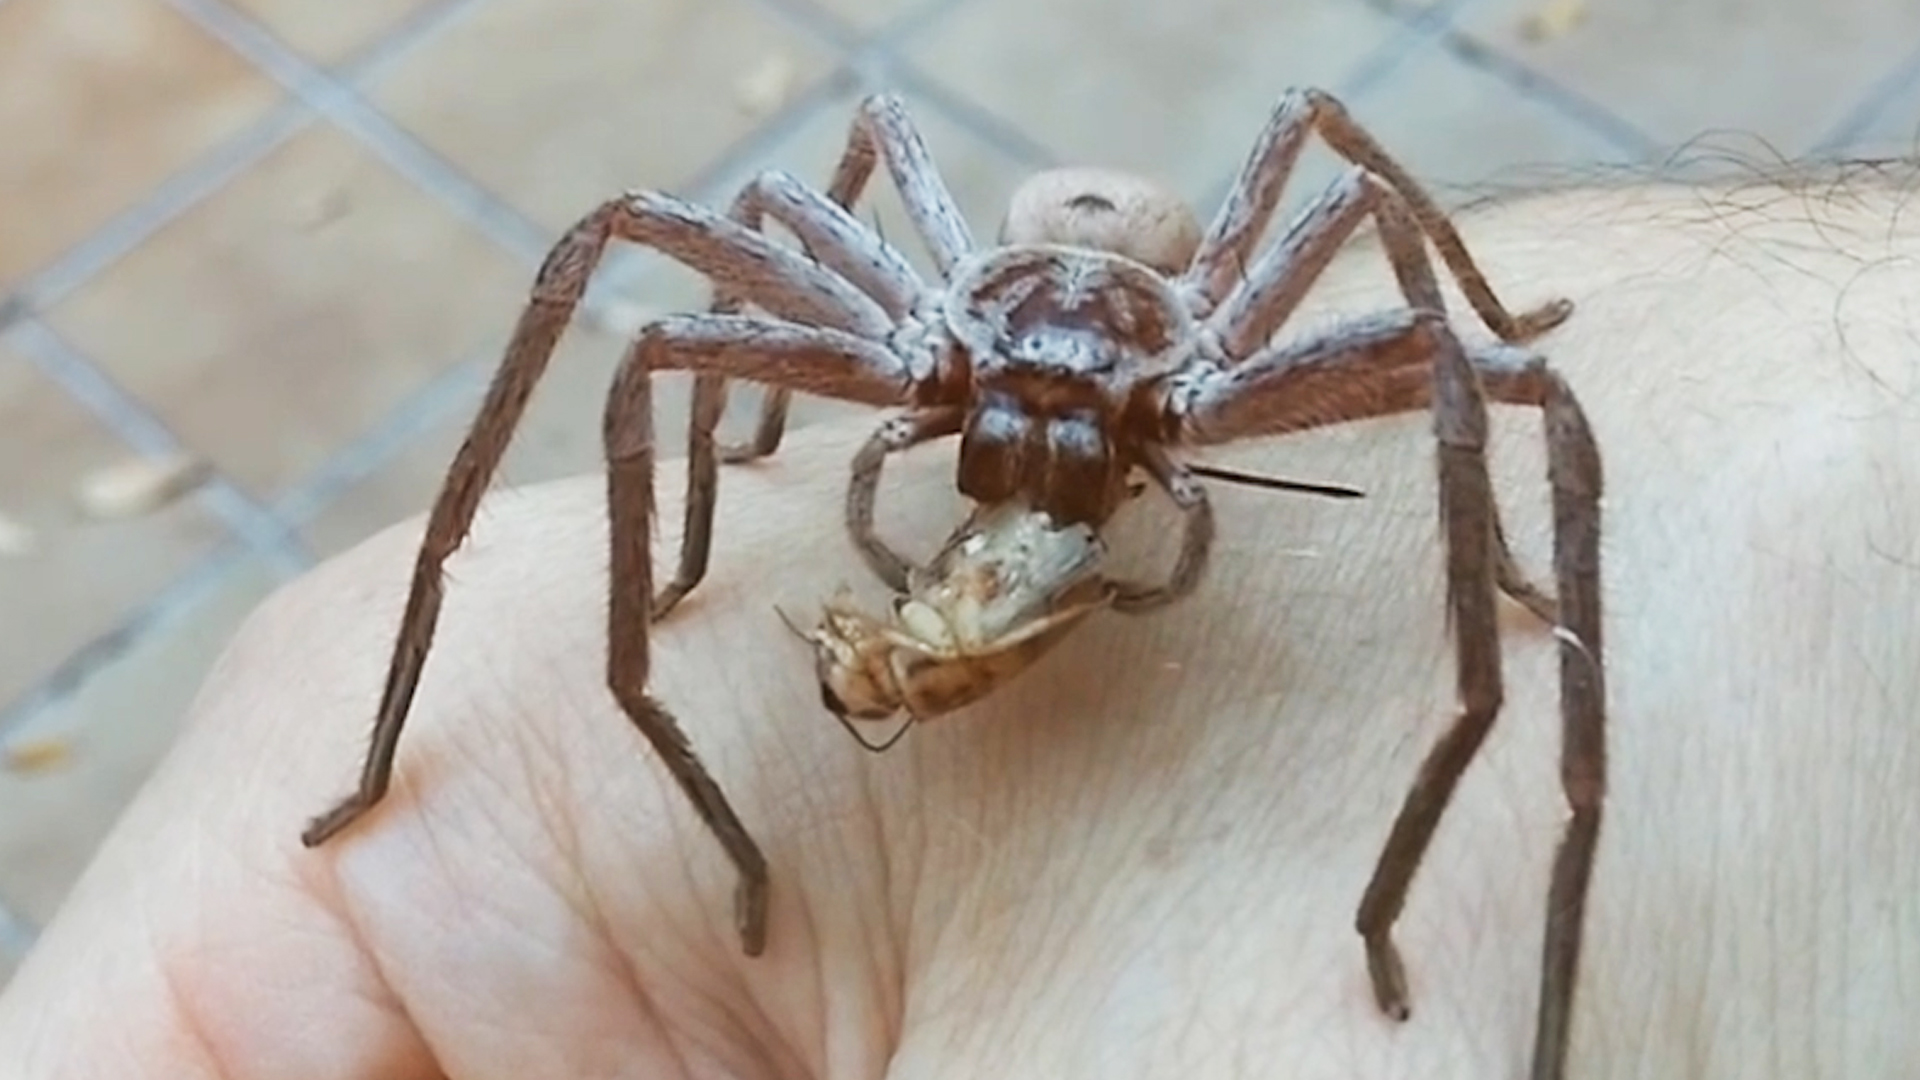 Giant Spider Devours Cricket On Man's Hand